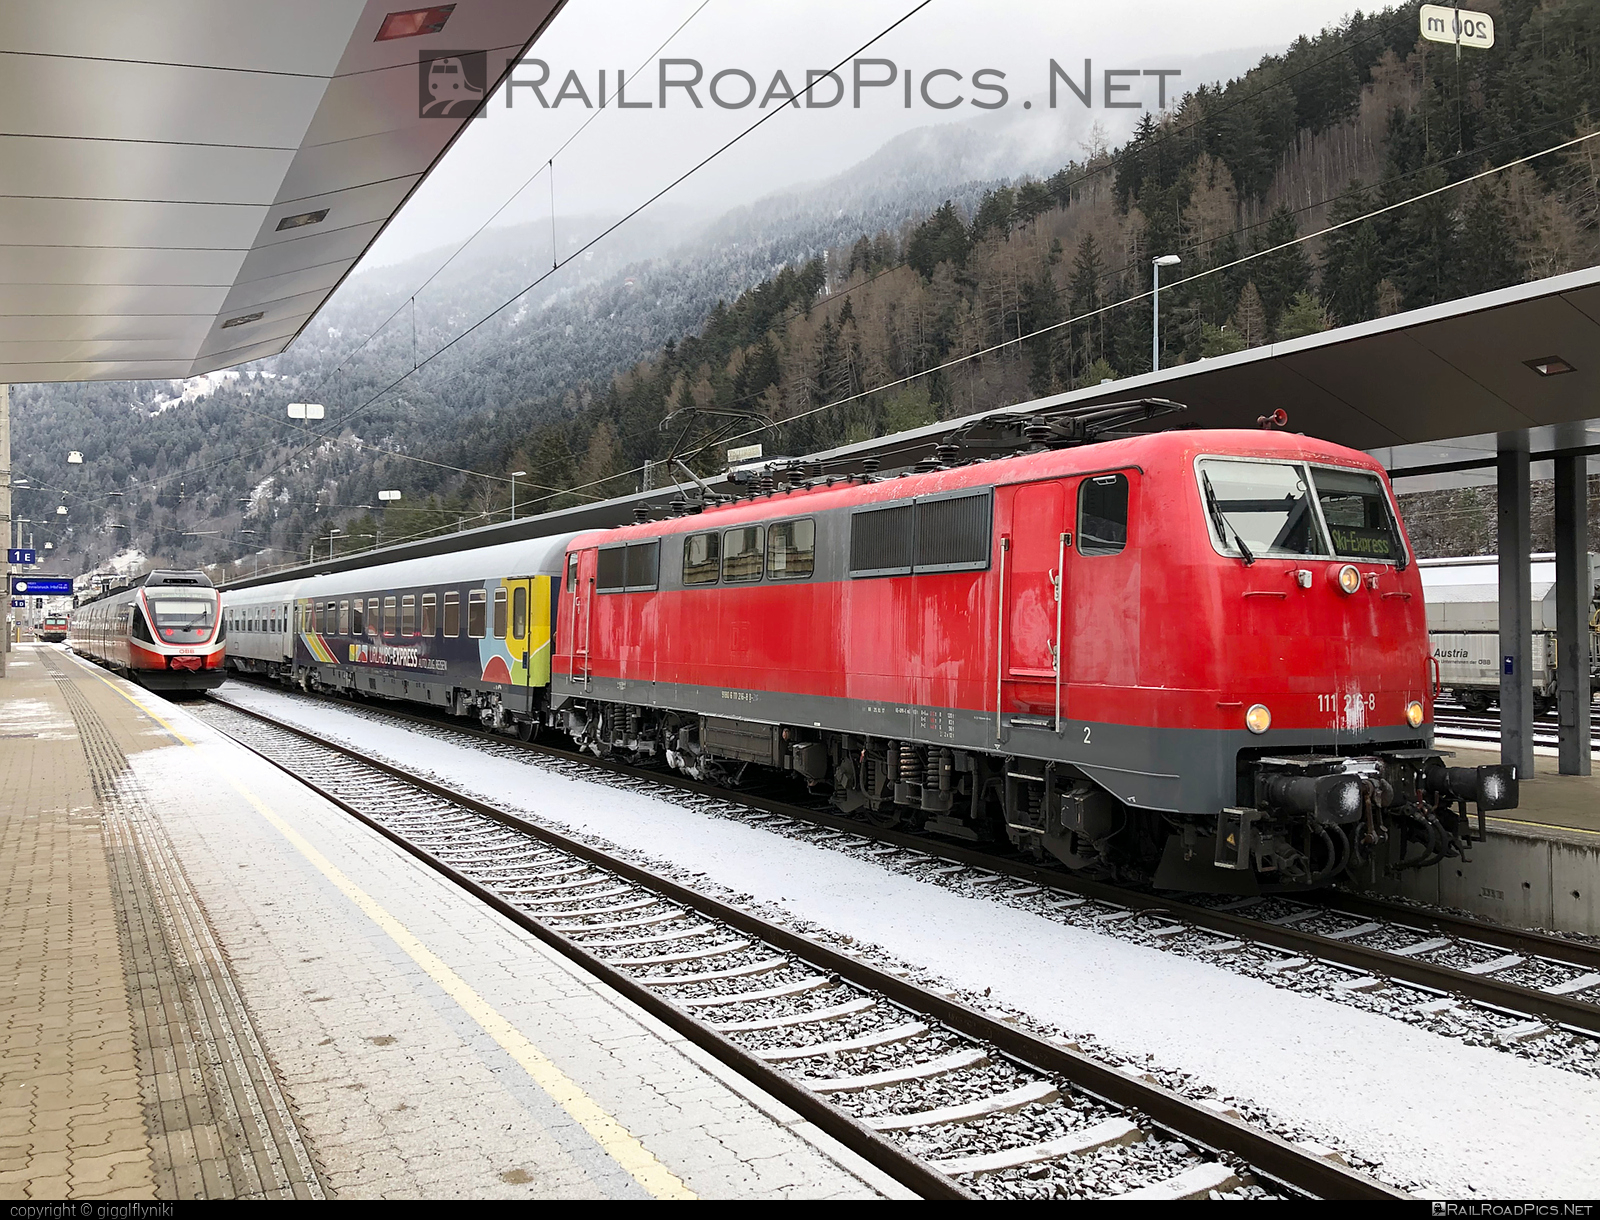 DB Class 111 - 111 216-8 operated by smart rail GmbH #dbClass111 #smartrail #urlaubsexpress #zug